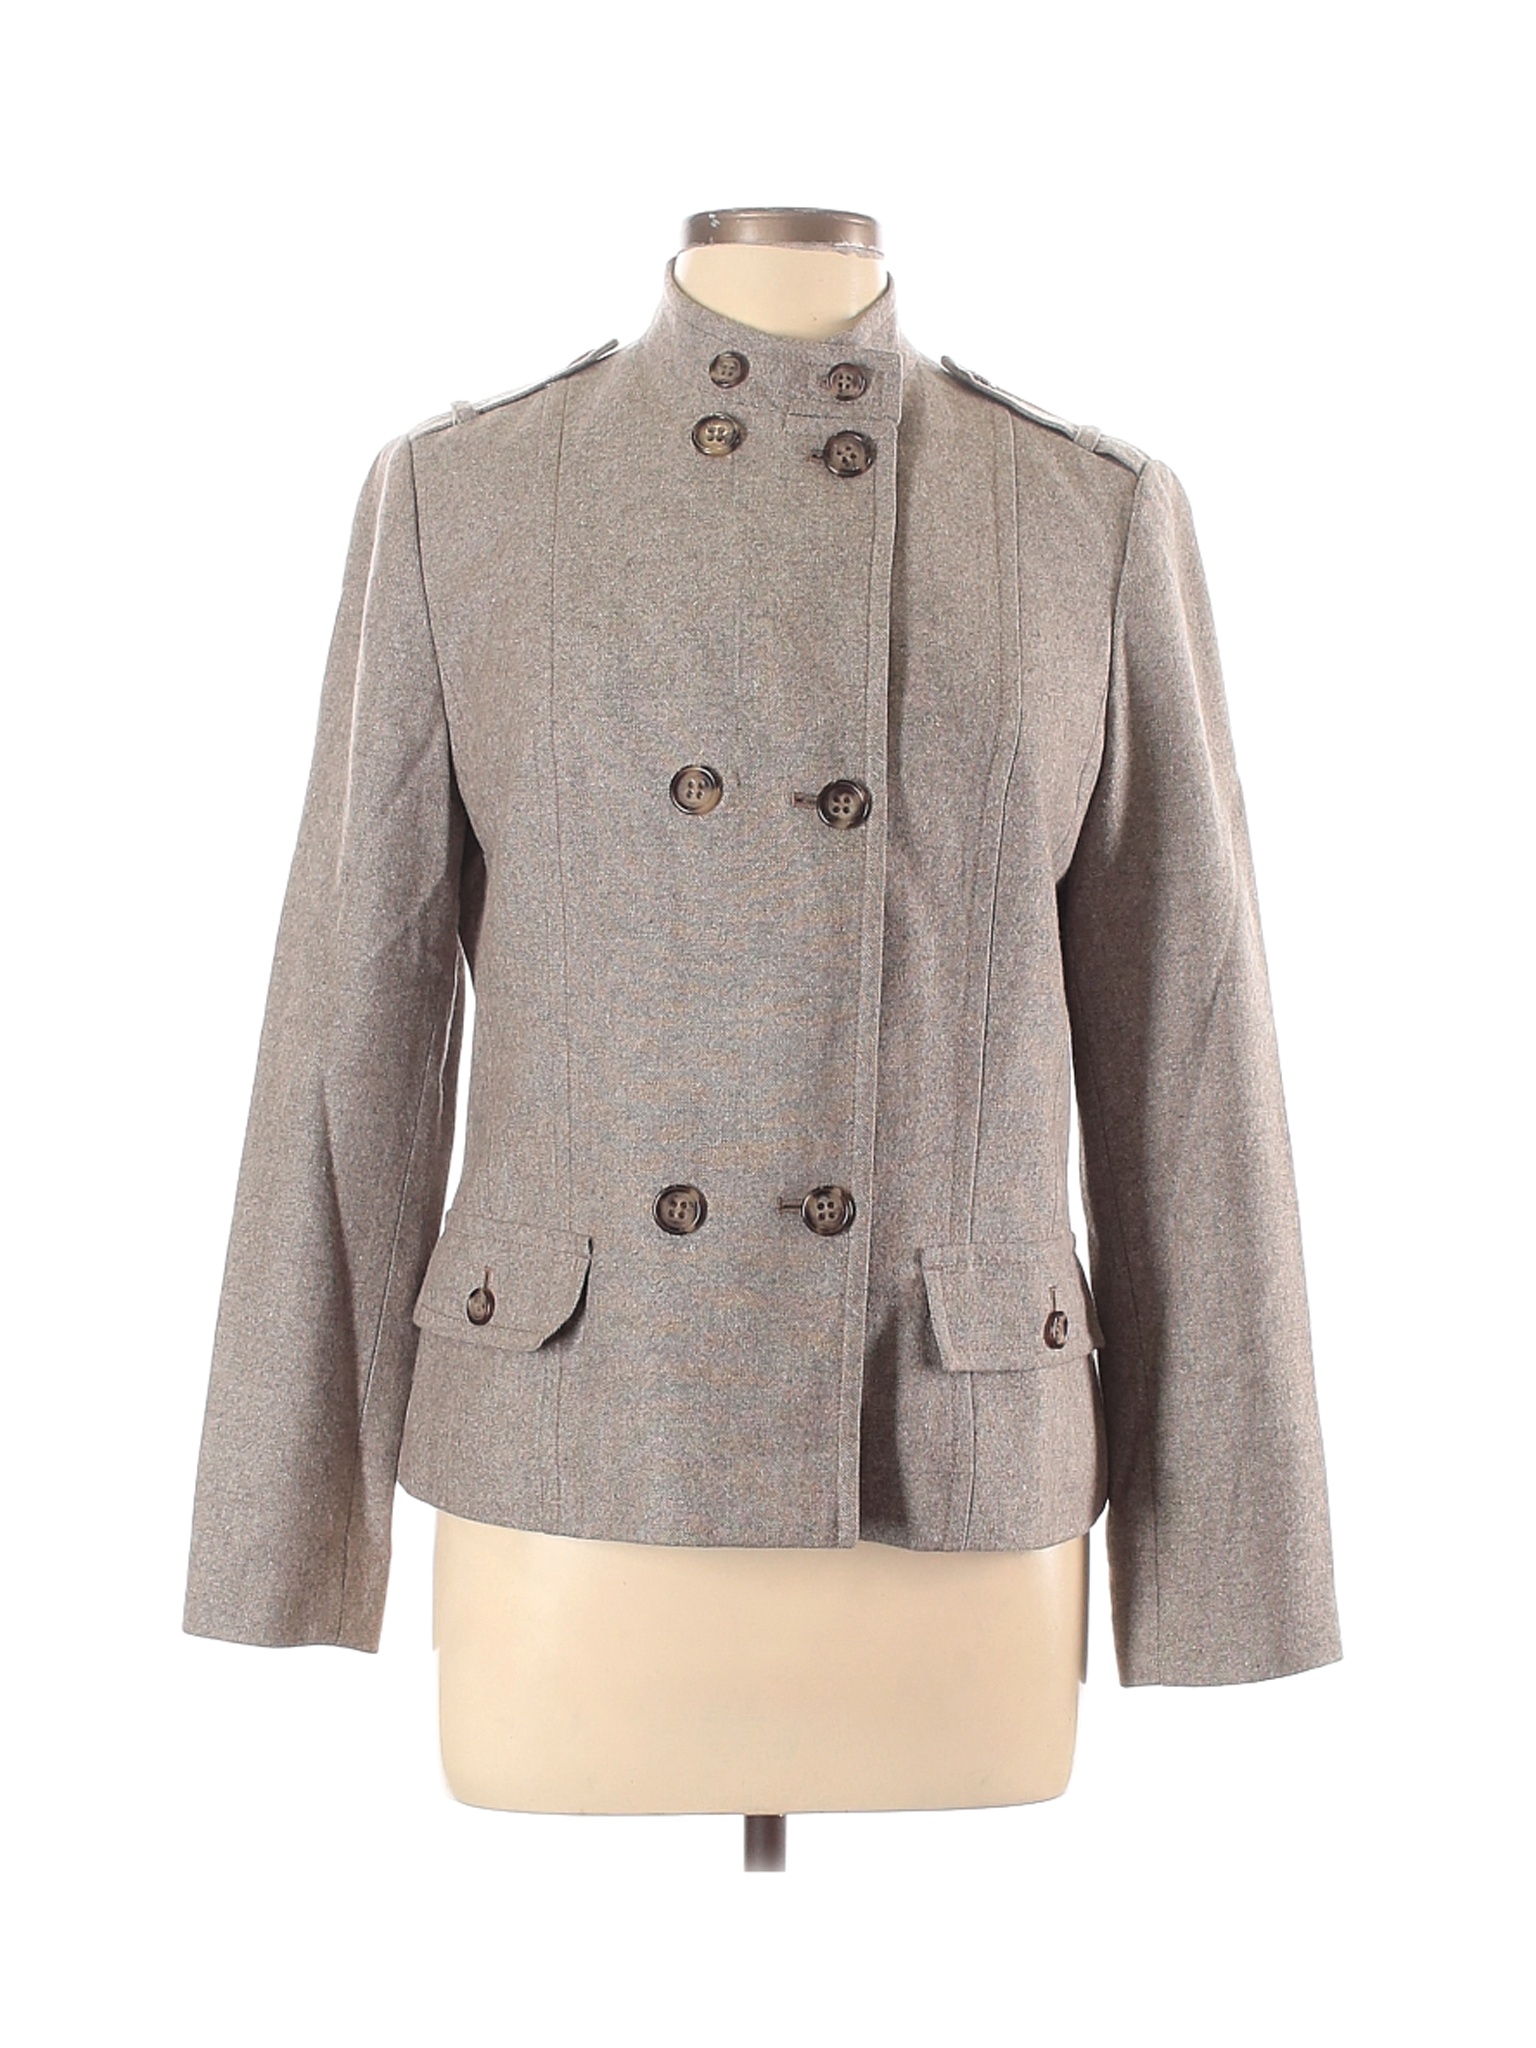 Liz Claiborne Women Gray Jacket 12 Petites | eBay